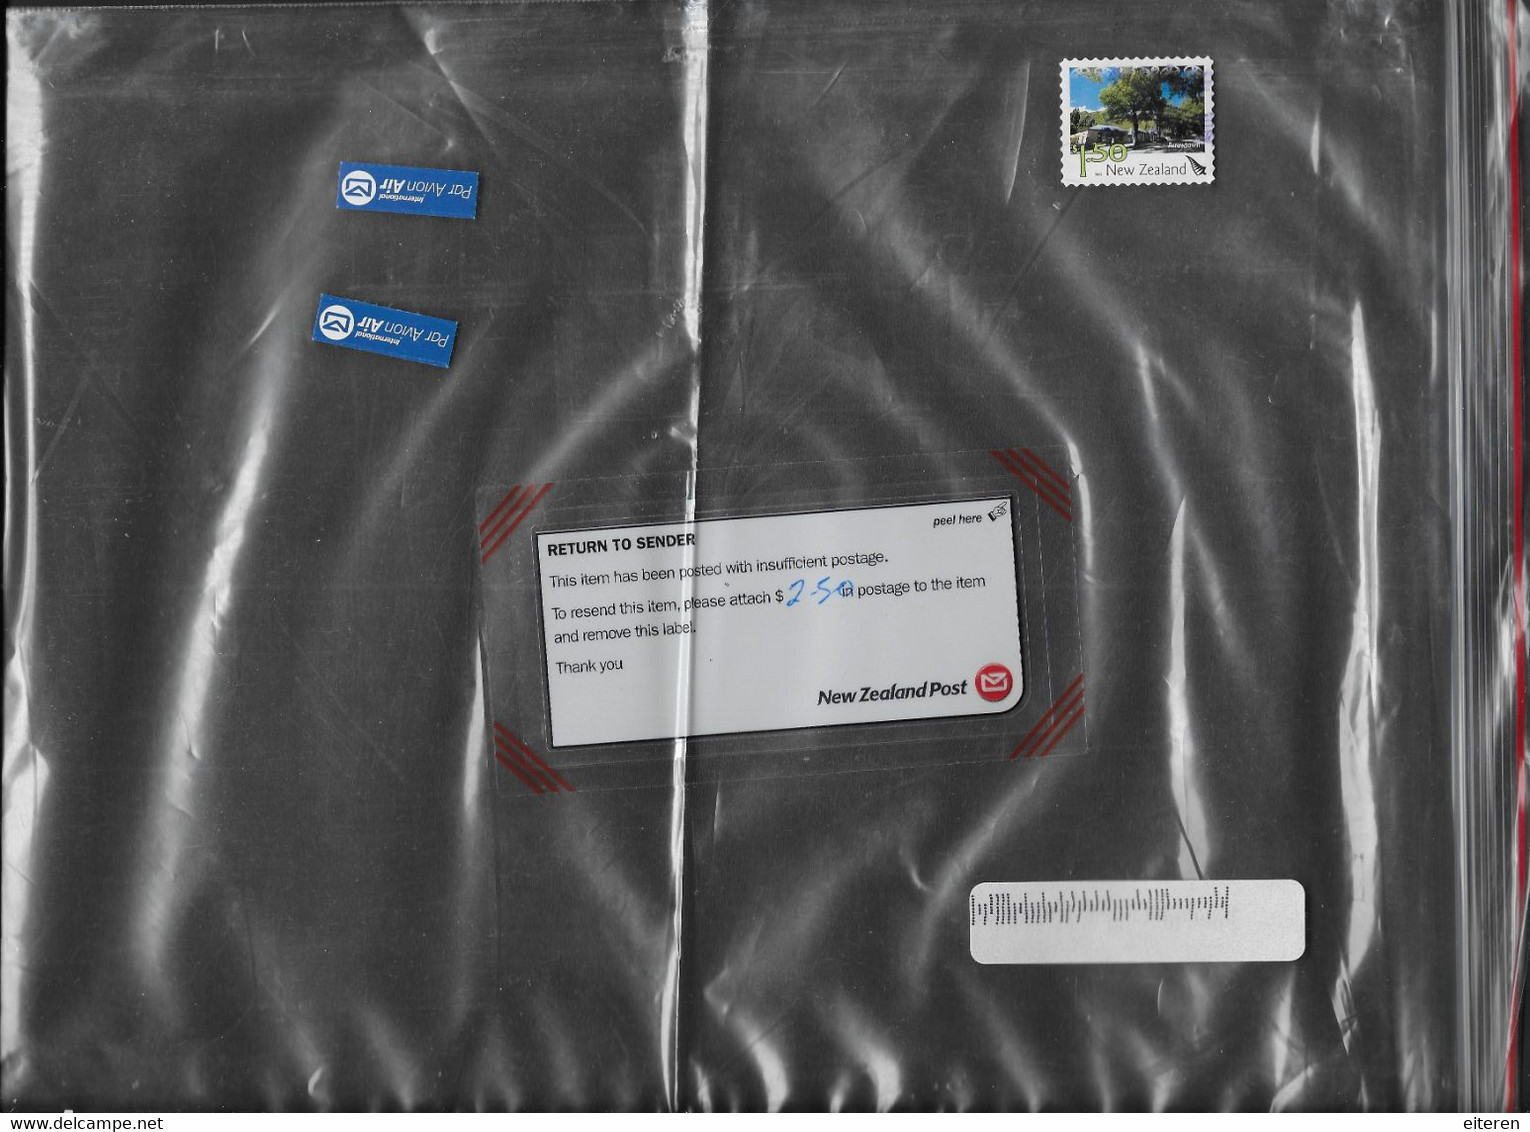 Grip Bag For Item With Insufficient Postage - Gripzakje Tbv Poststuk Met Te Weinig Port - Postage Due